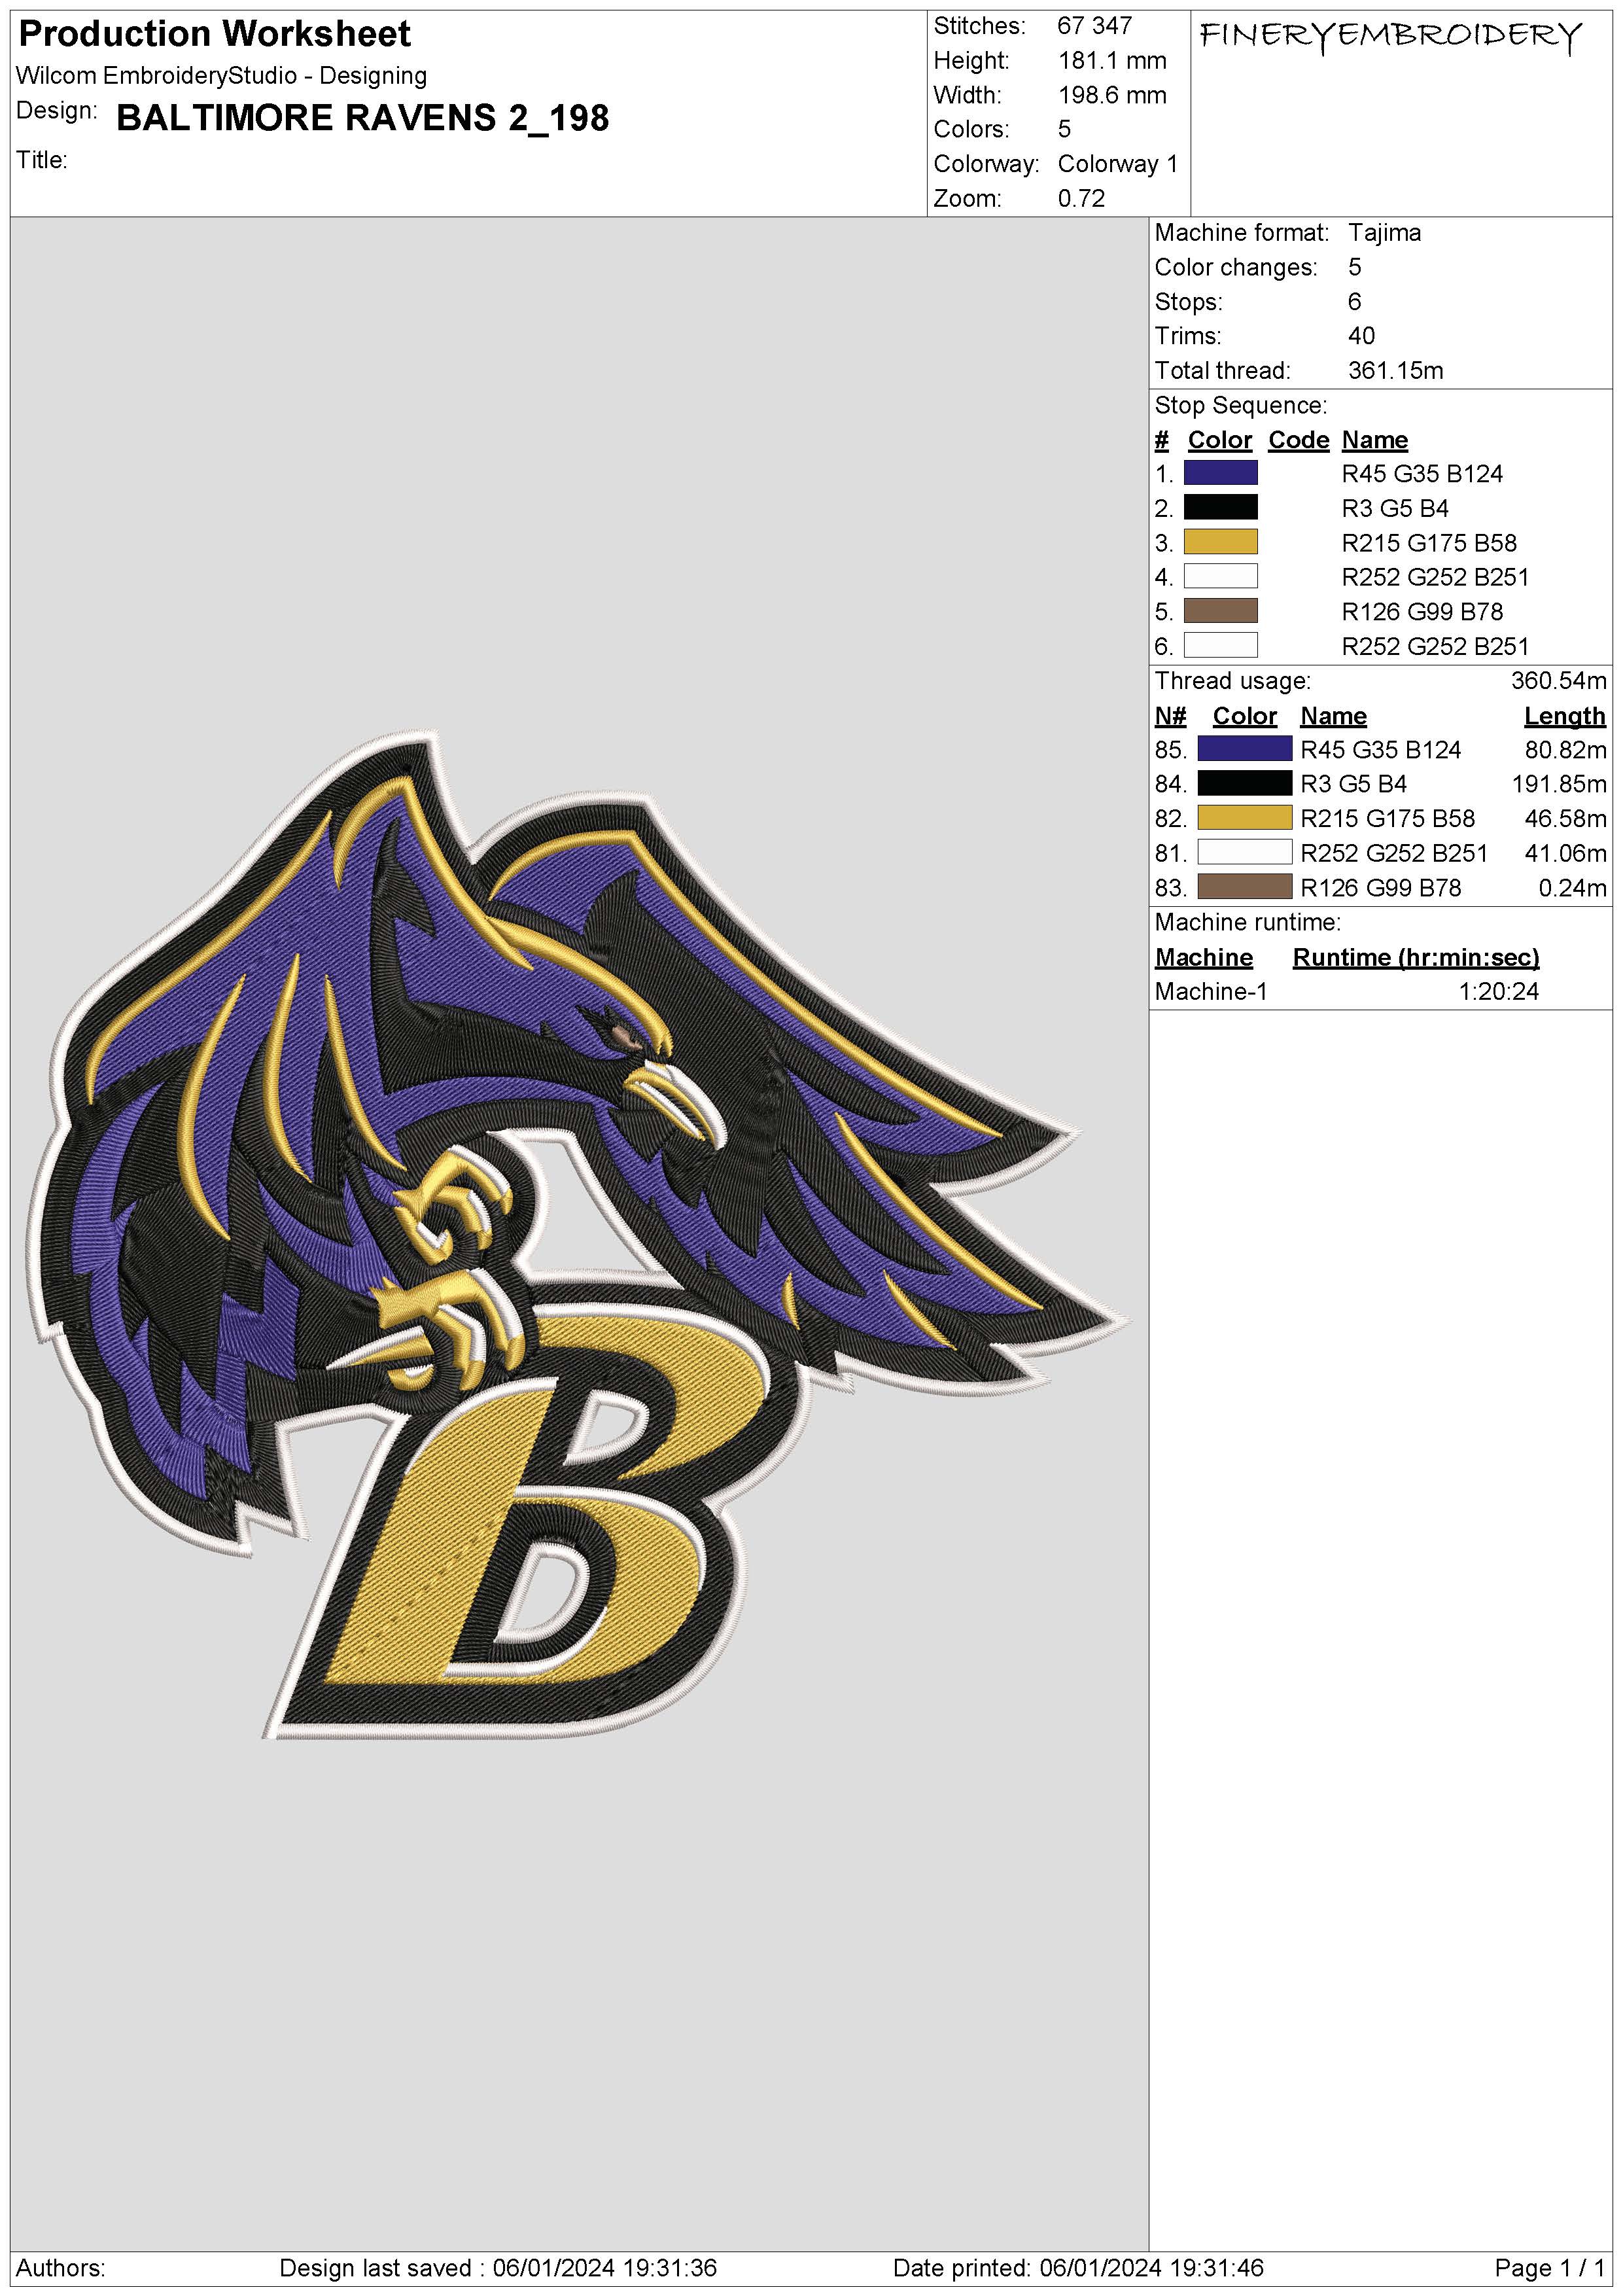 Baltimore Ravens 2 : Embroidery Design